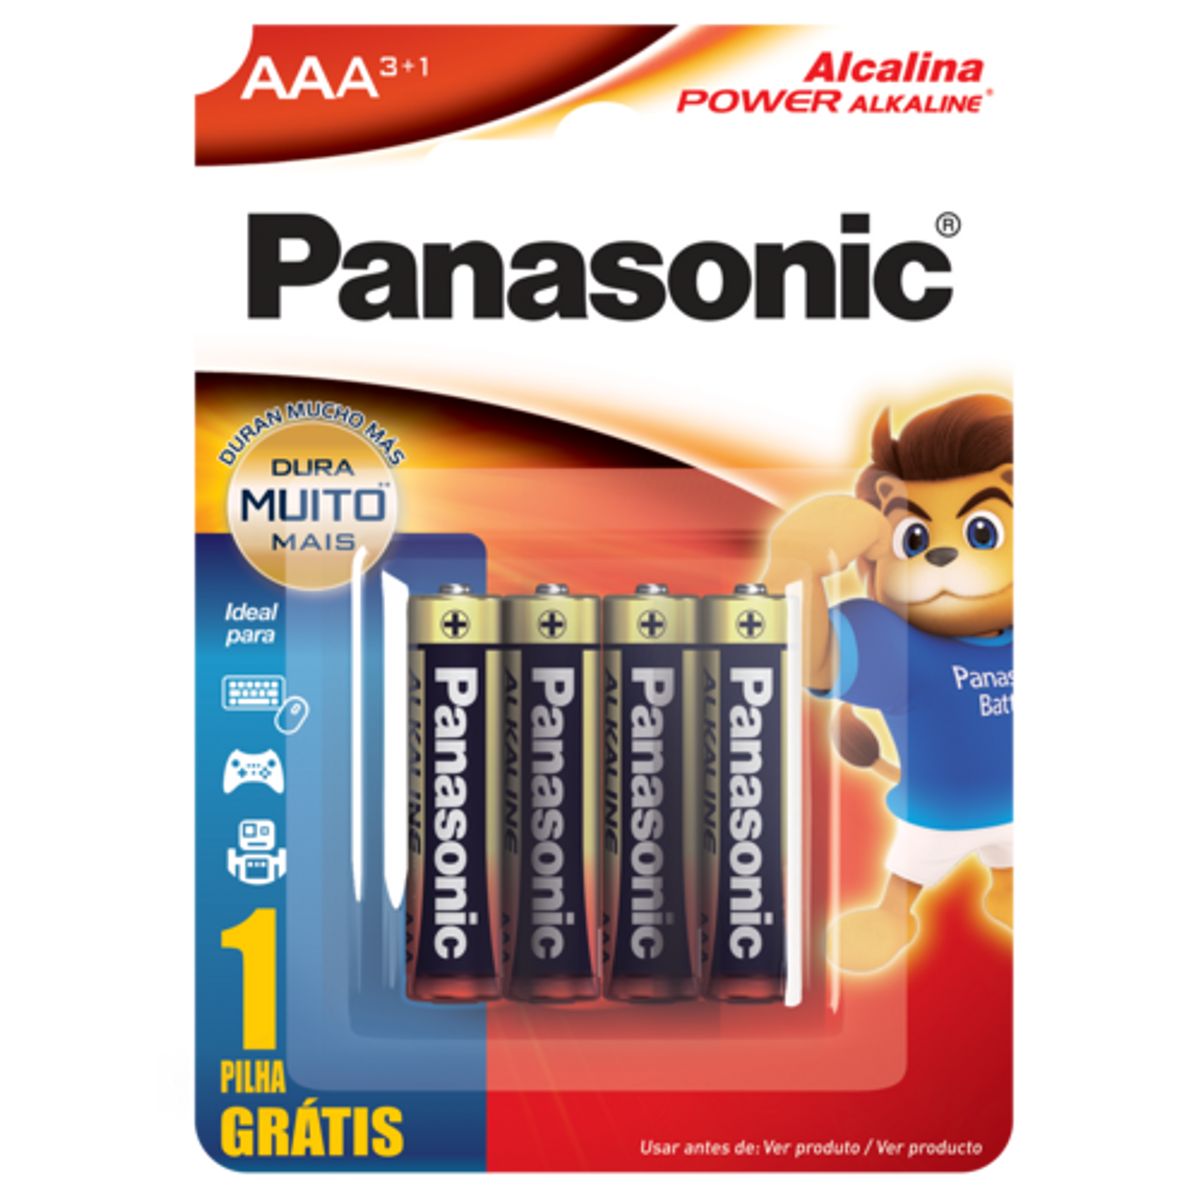 Pilha Panasonic Alcalina AAA 3+1 Unidade